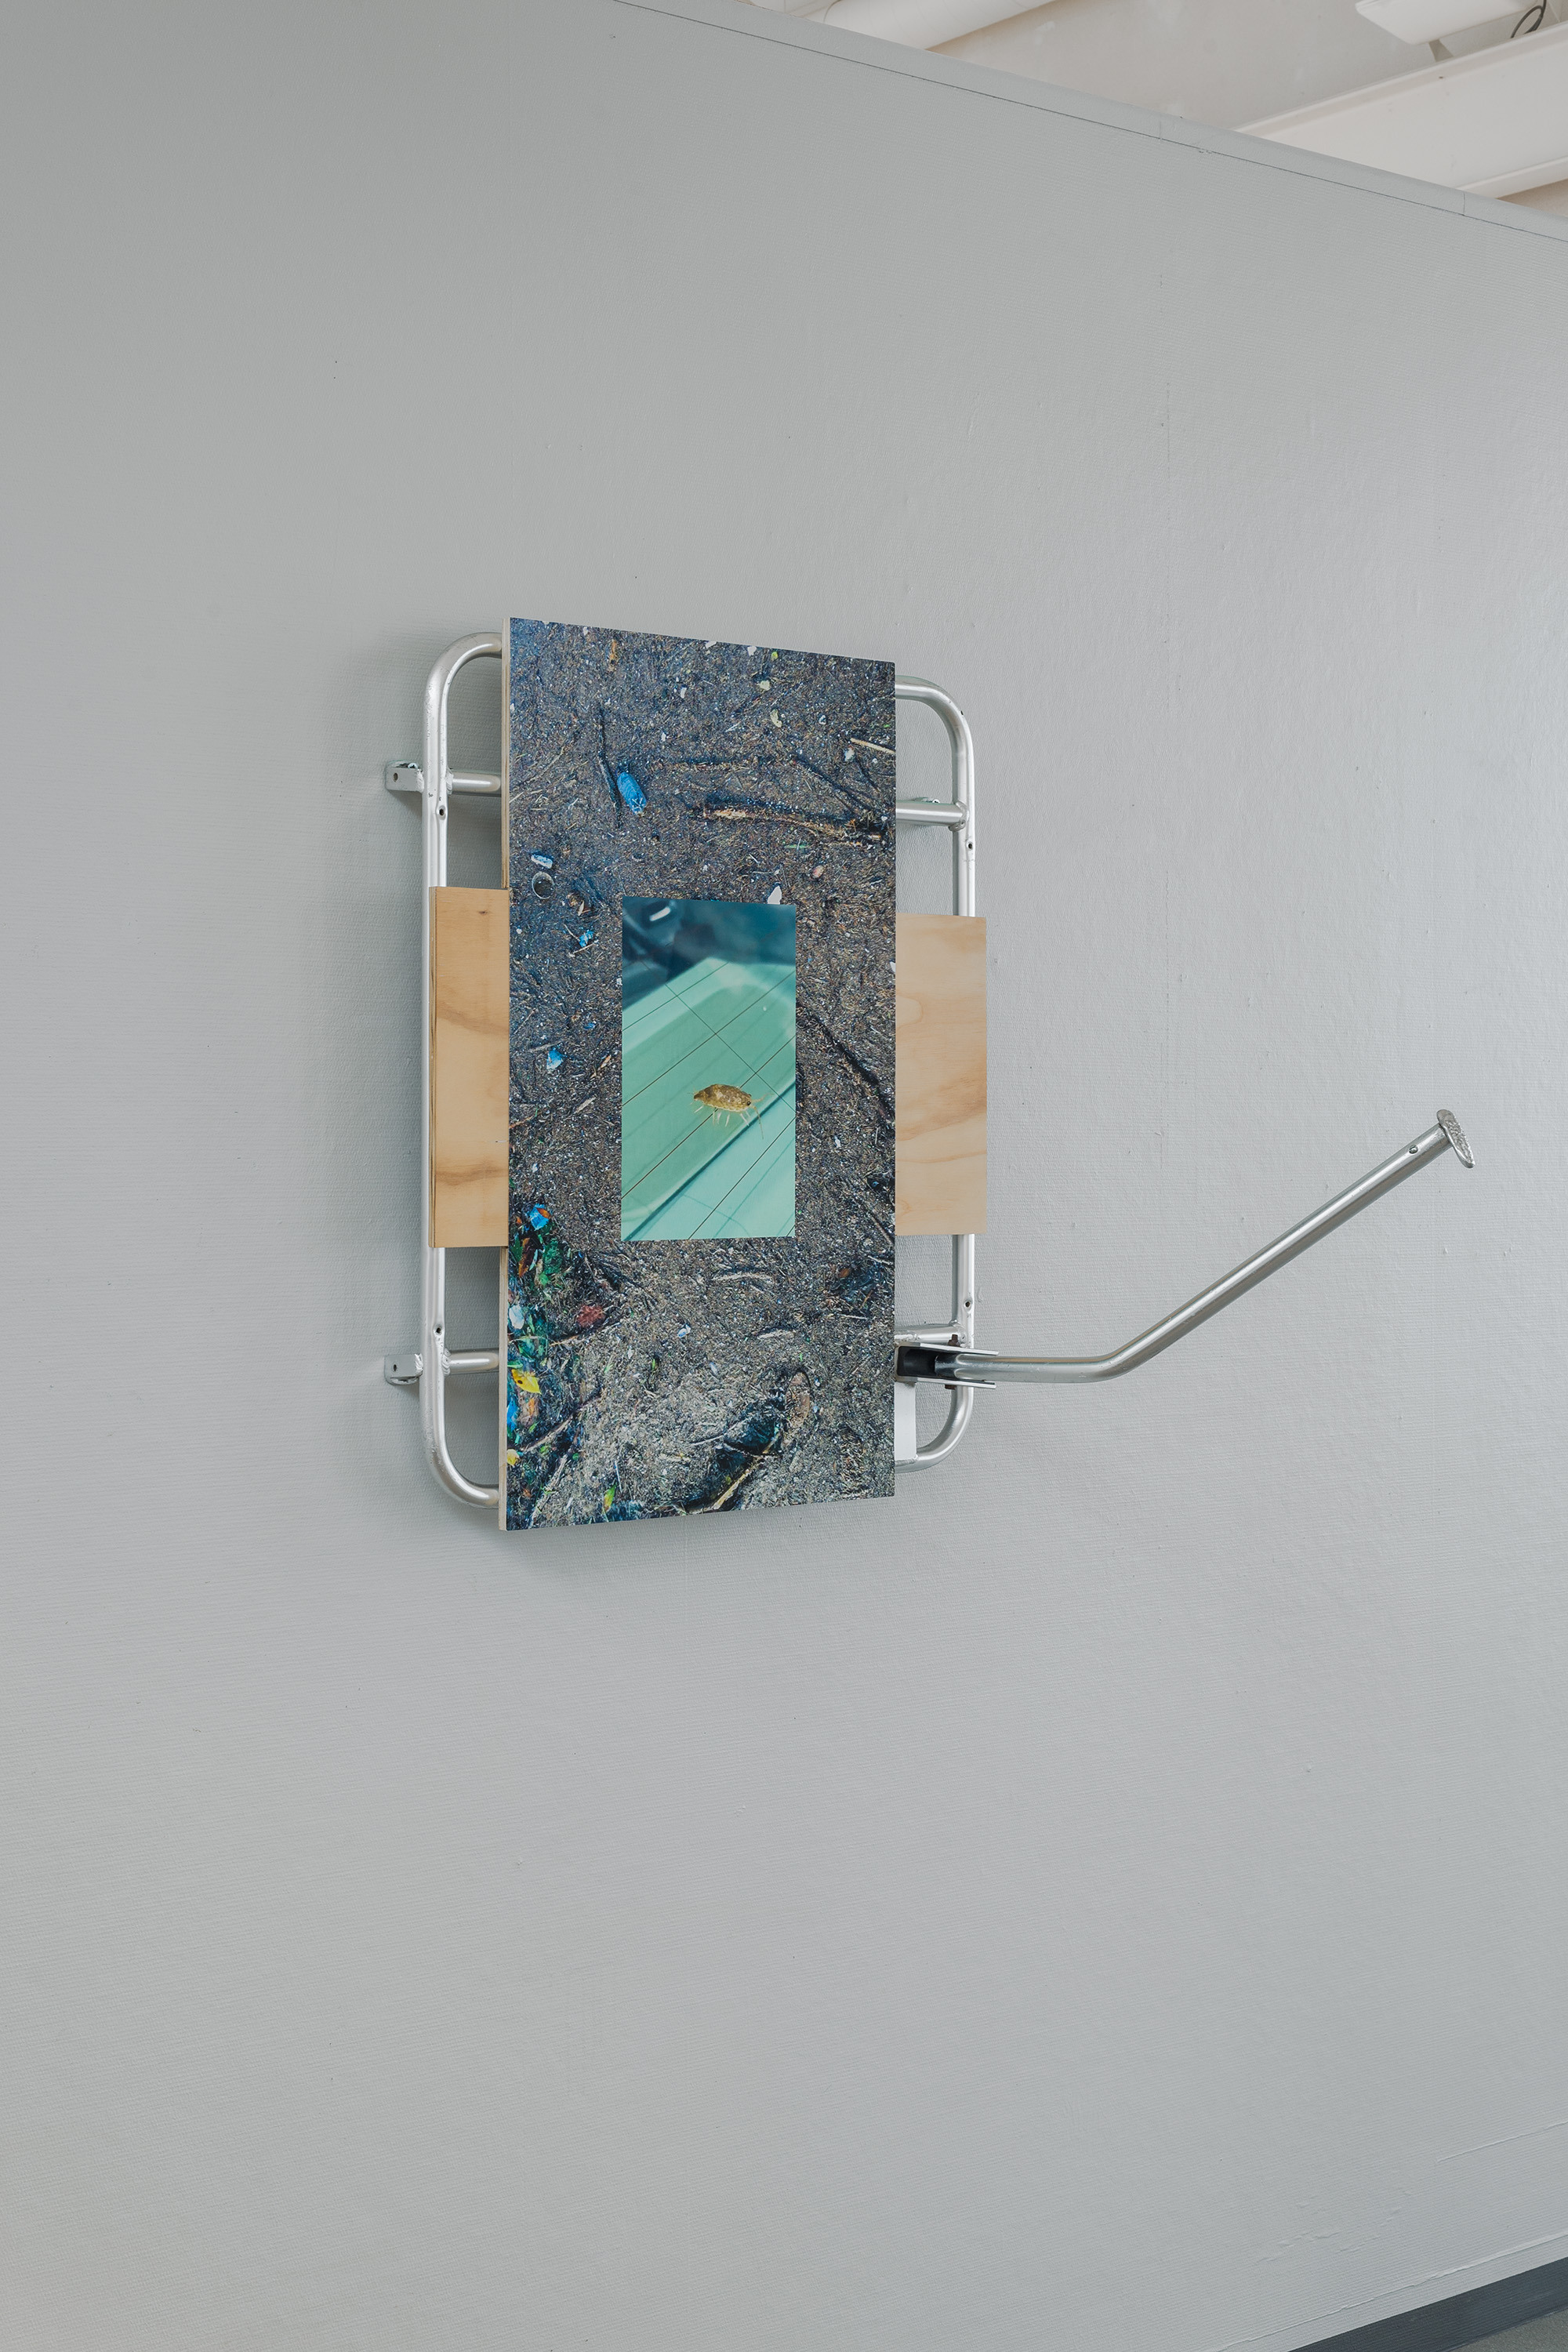 Matti Sumari, Malus Domus (free trial period), aluminum, plywood, digital print, 2022